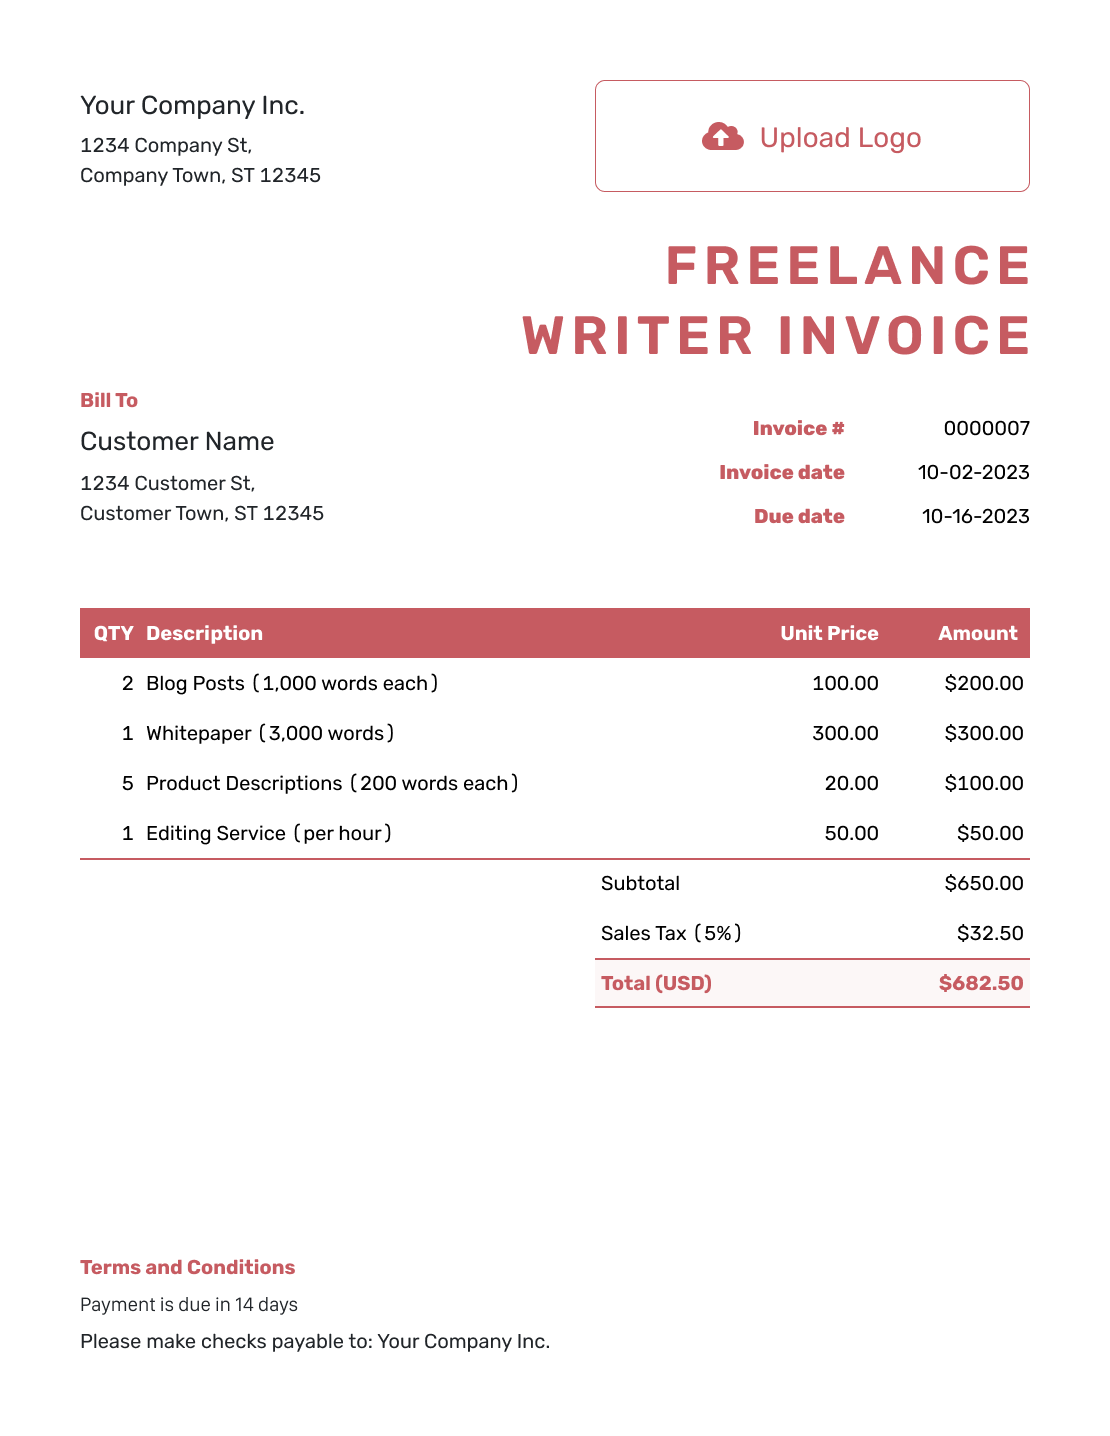 Itemized Freelance Writer Invoice Template